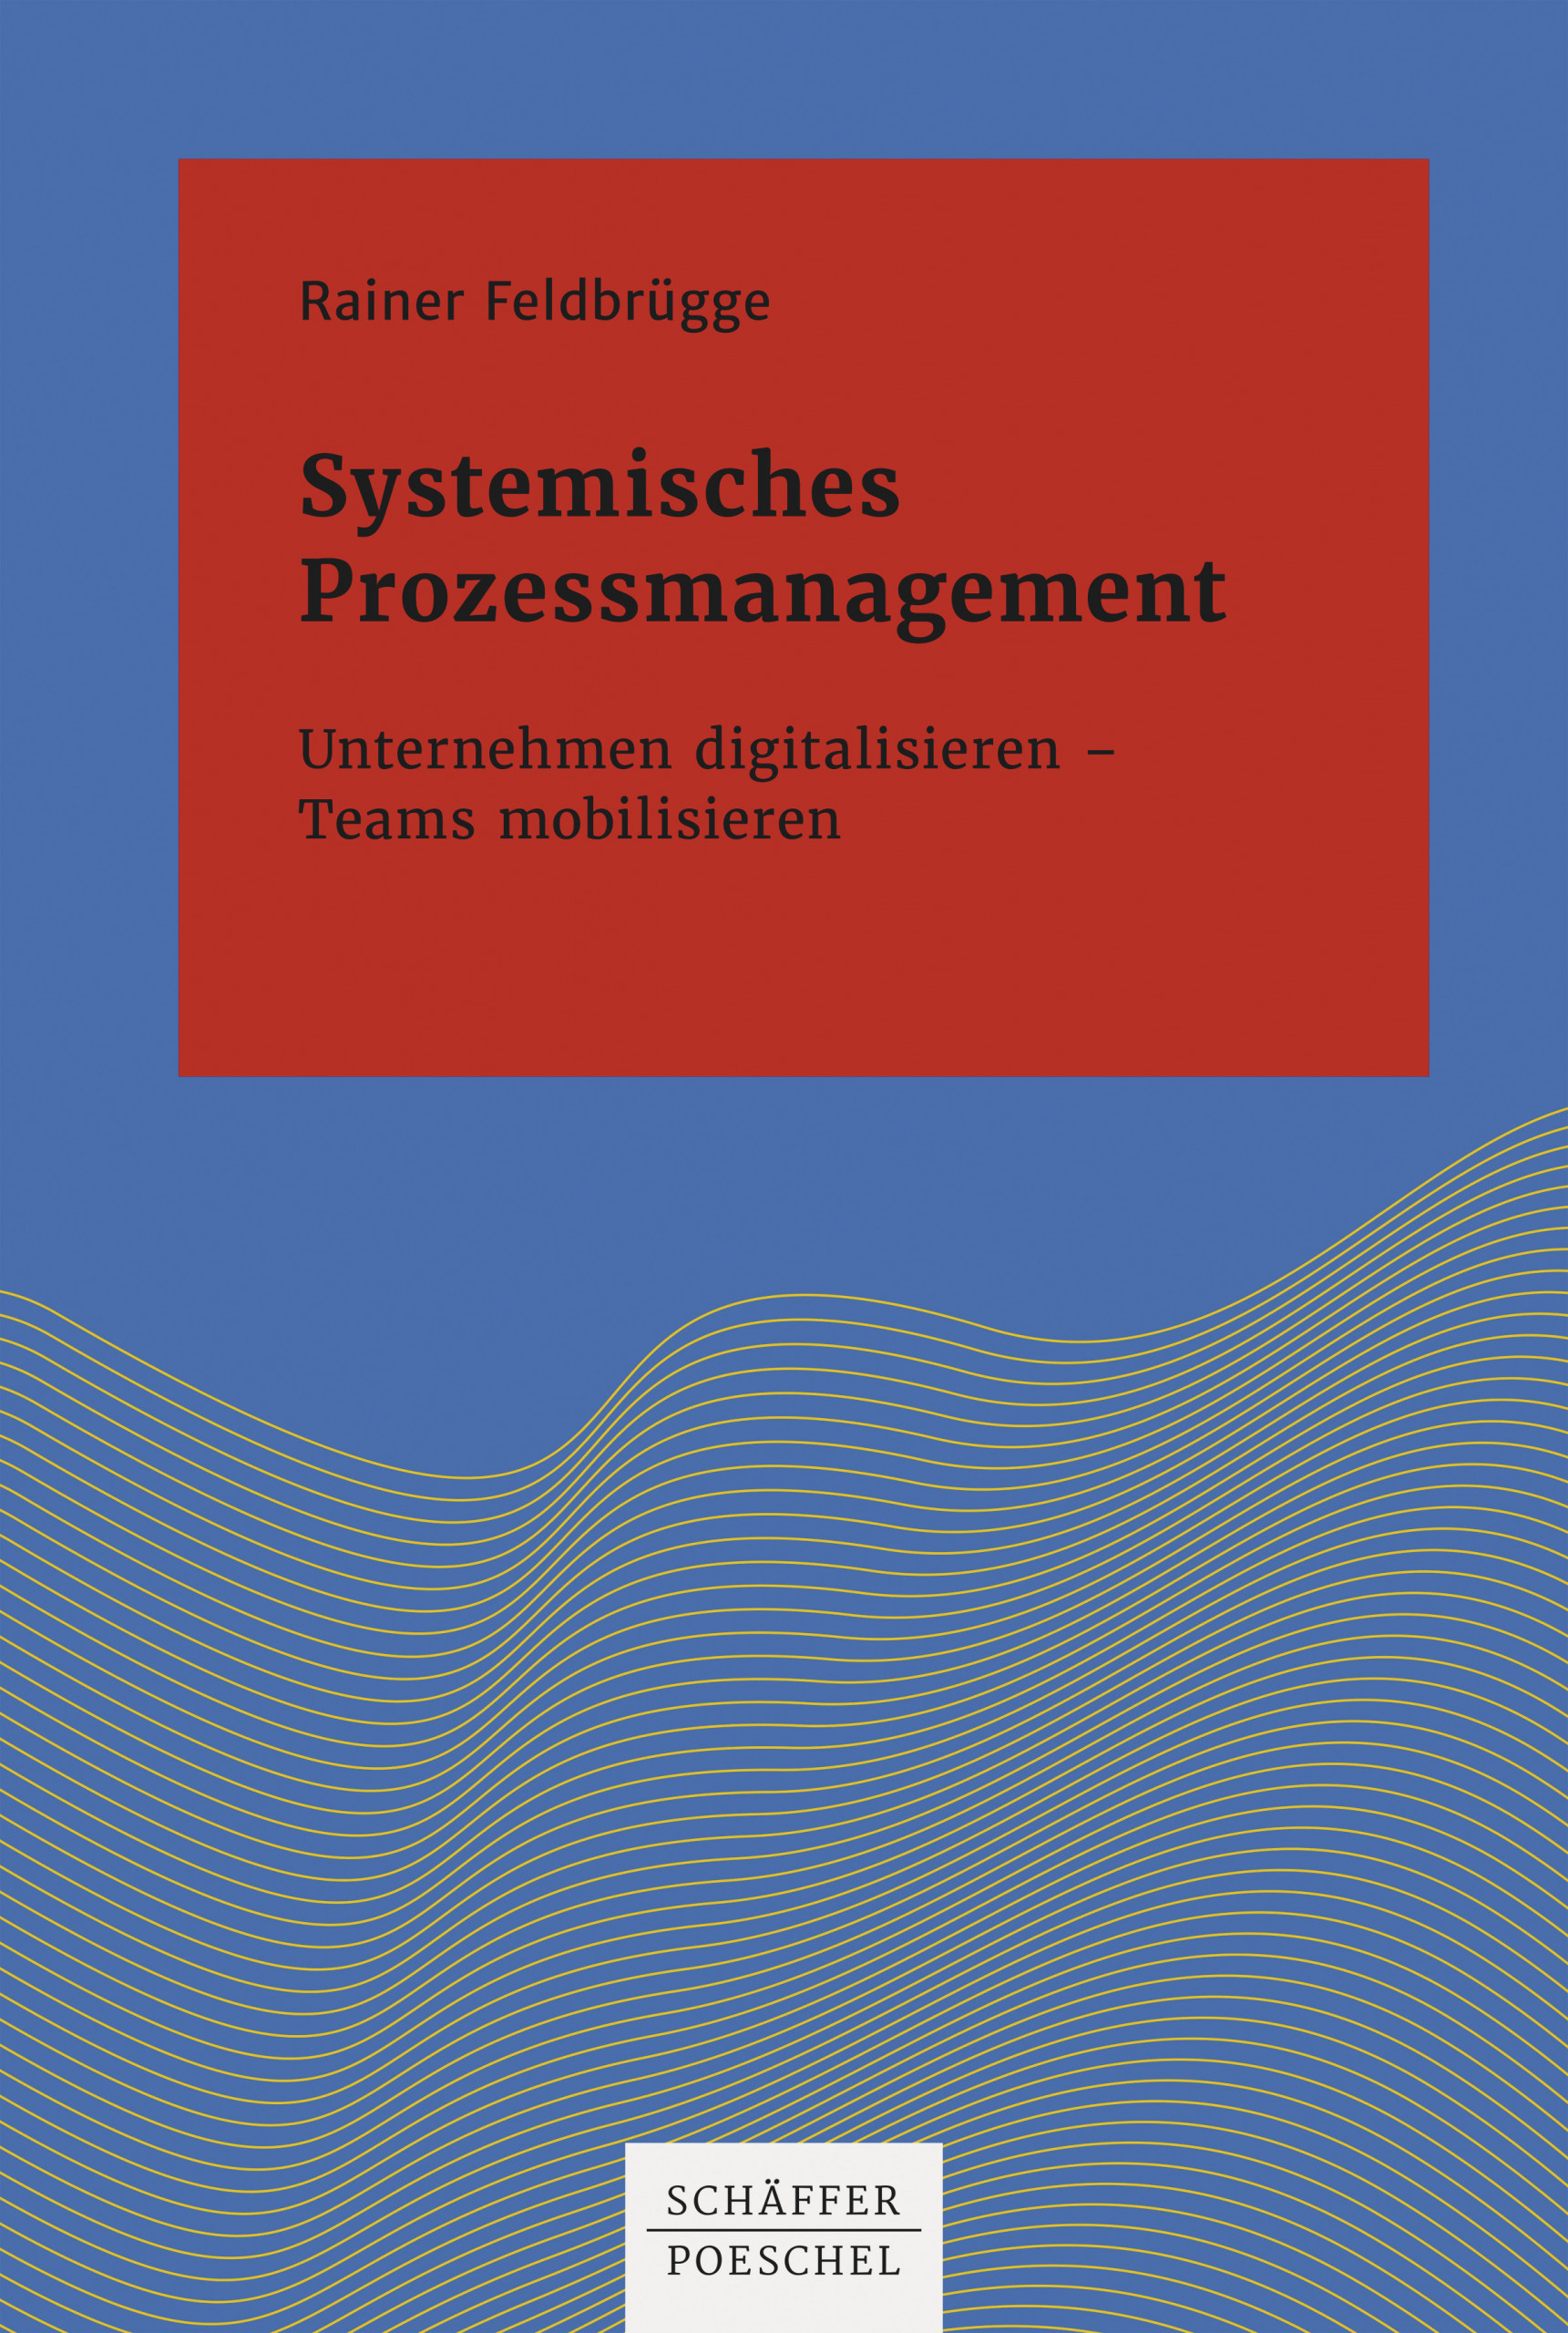 Feldbrügge - Systemisches Prozessmanagement - Rezension - xm-institute - Dr. Oliver Mack